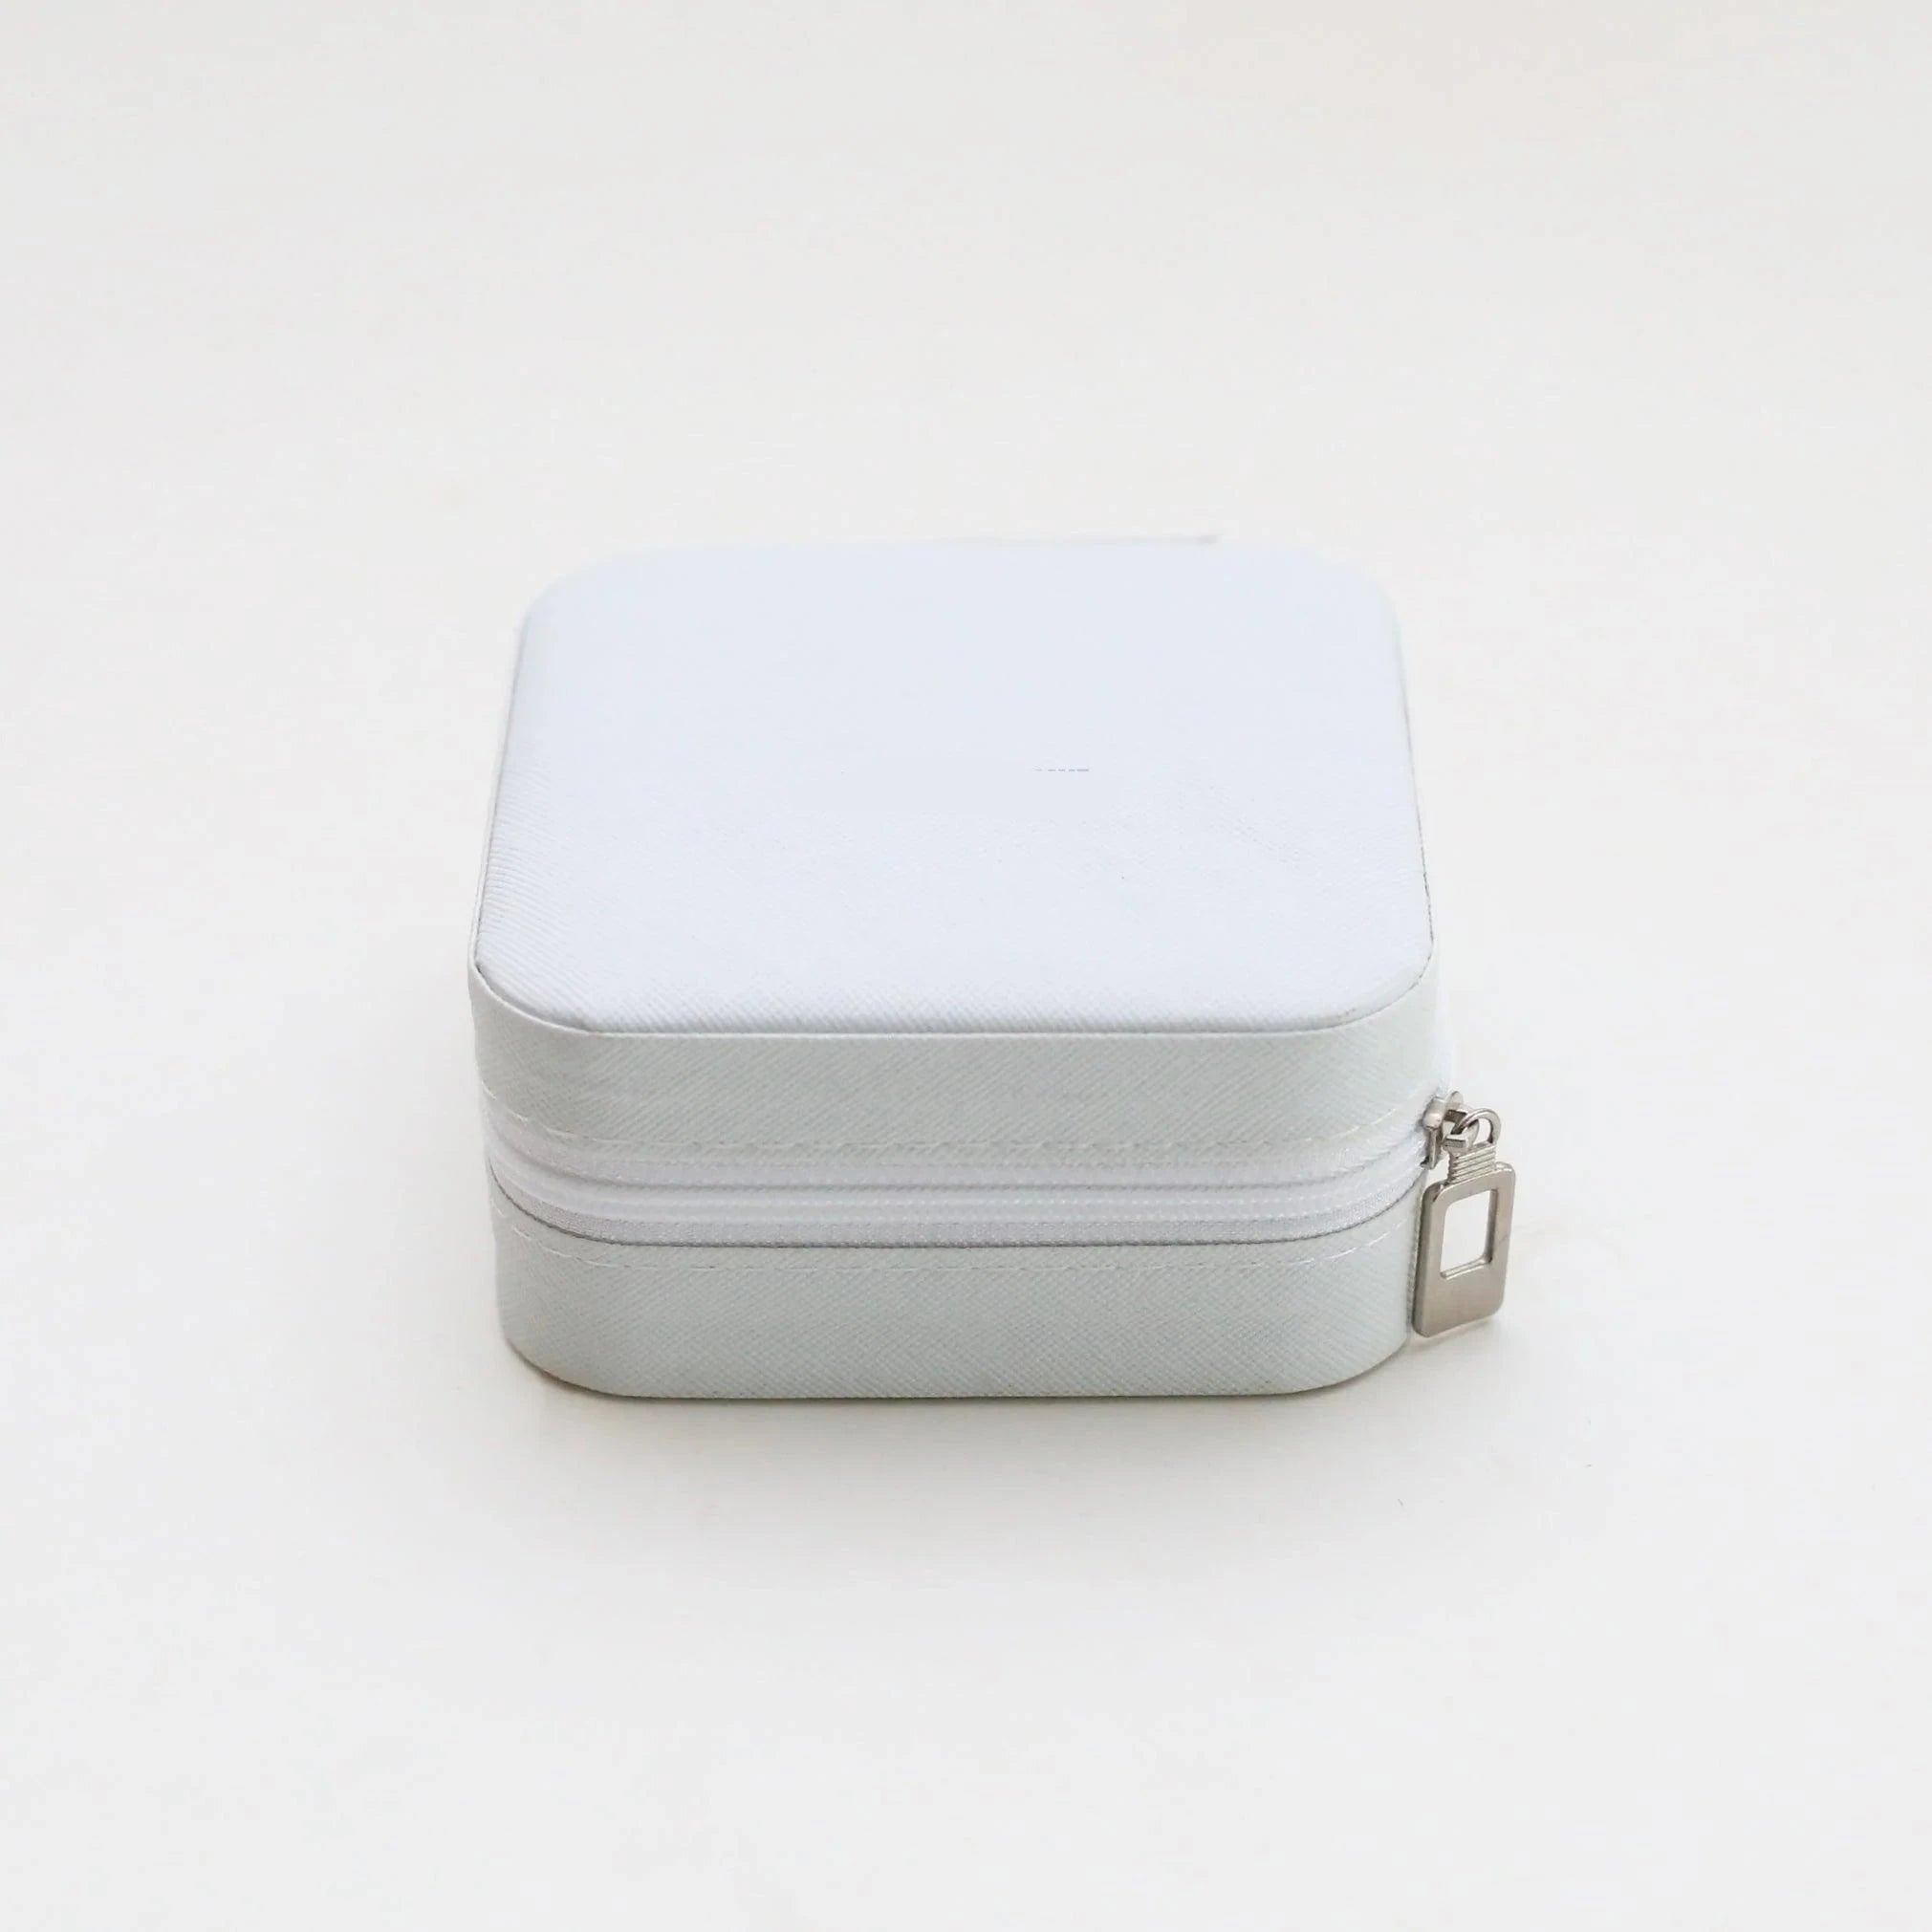 Portable Jewelry Box with Zipper Closure